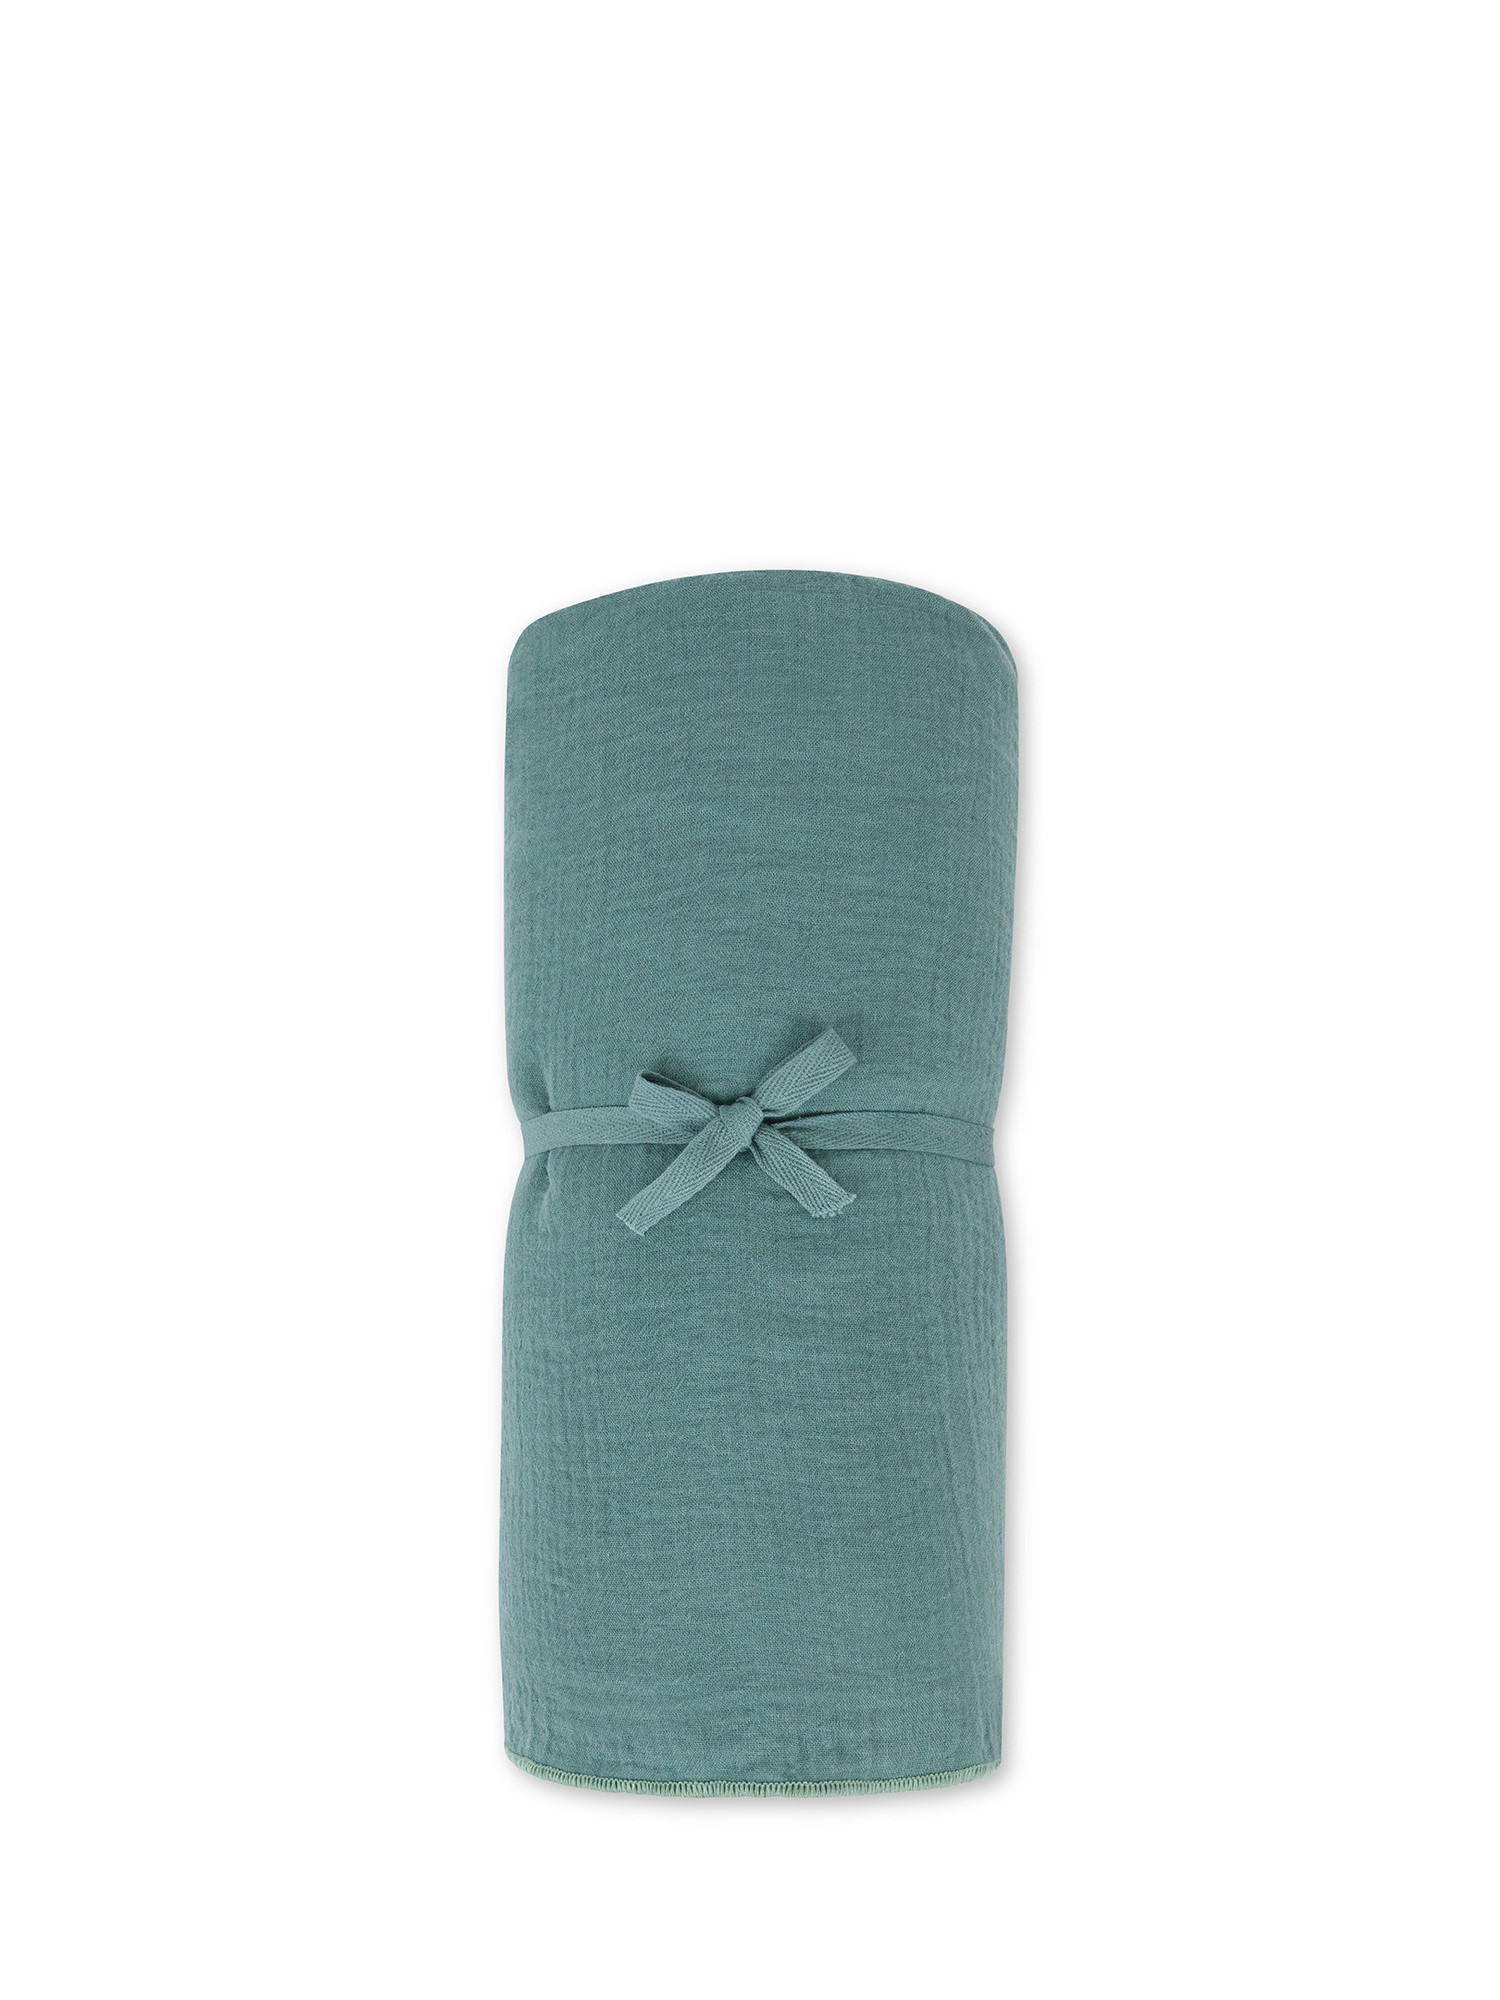 Solid color cotton gauze furnishing cloth, Teal, large image number 1